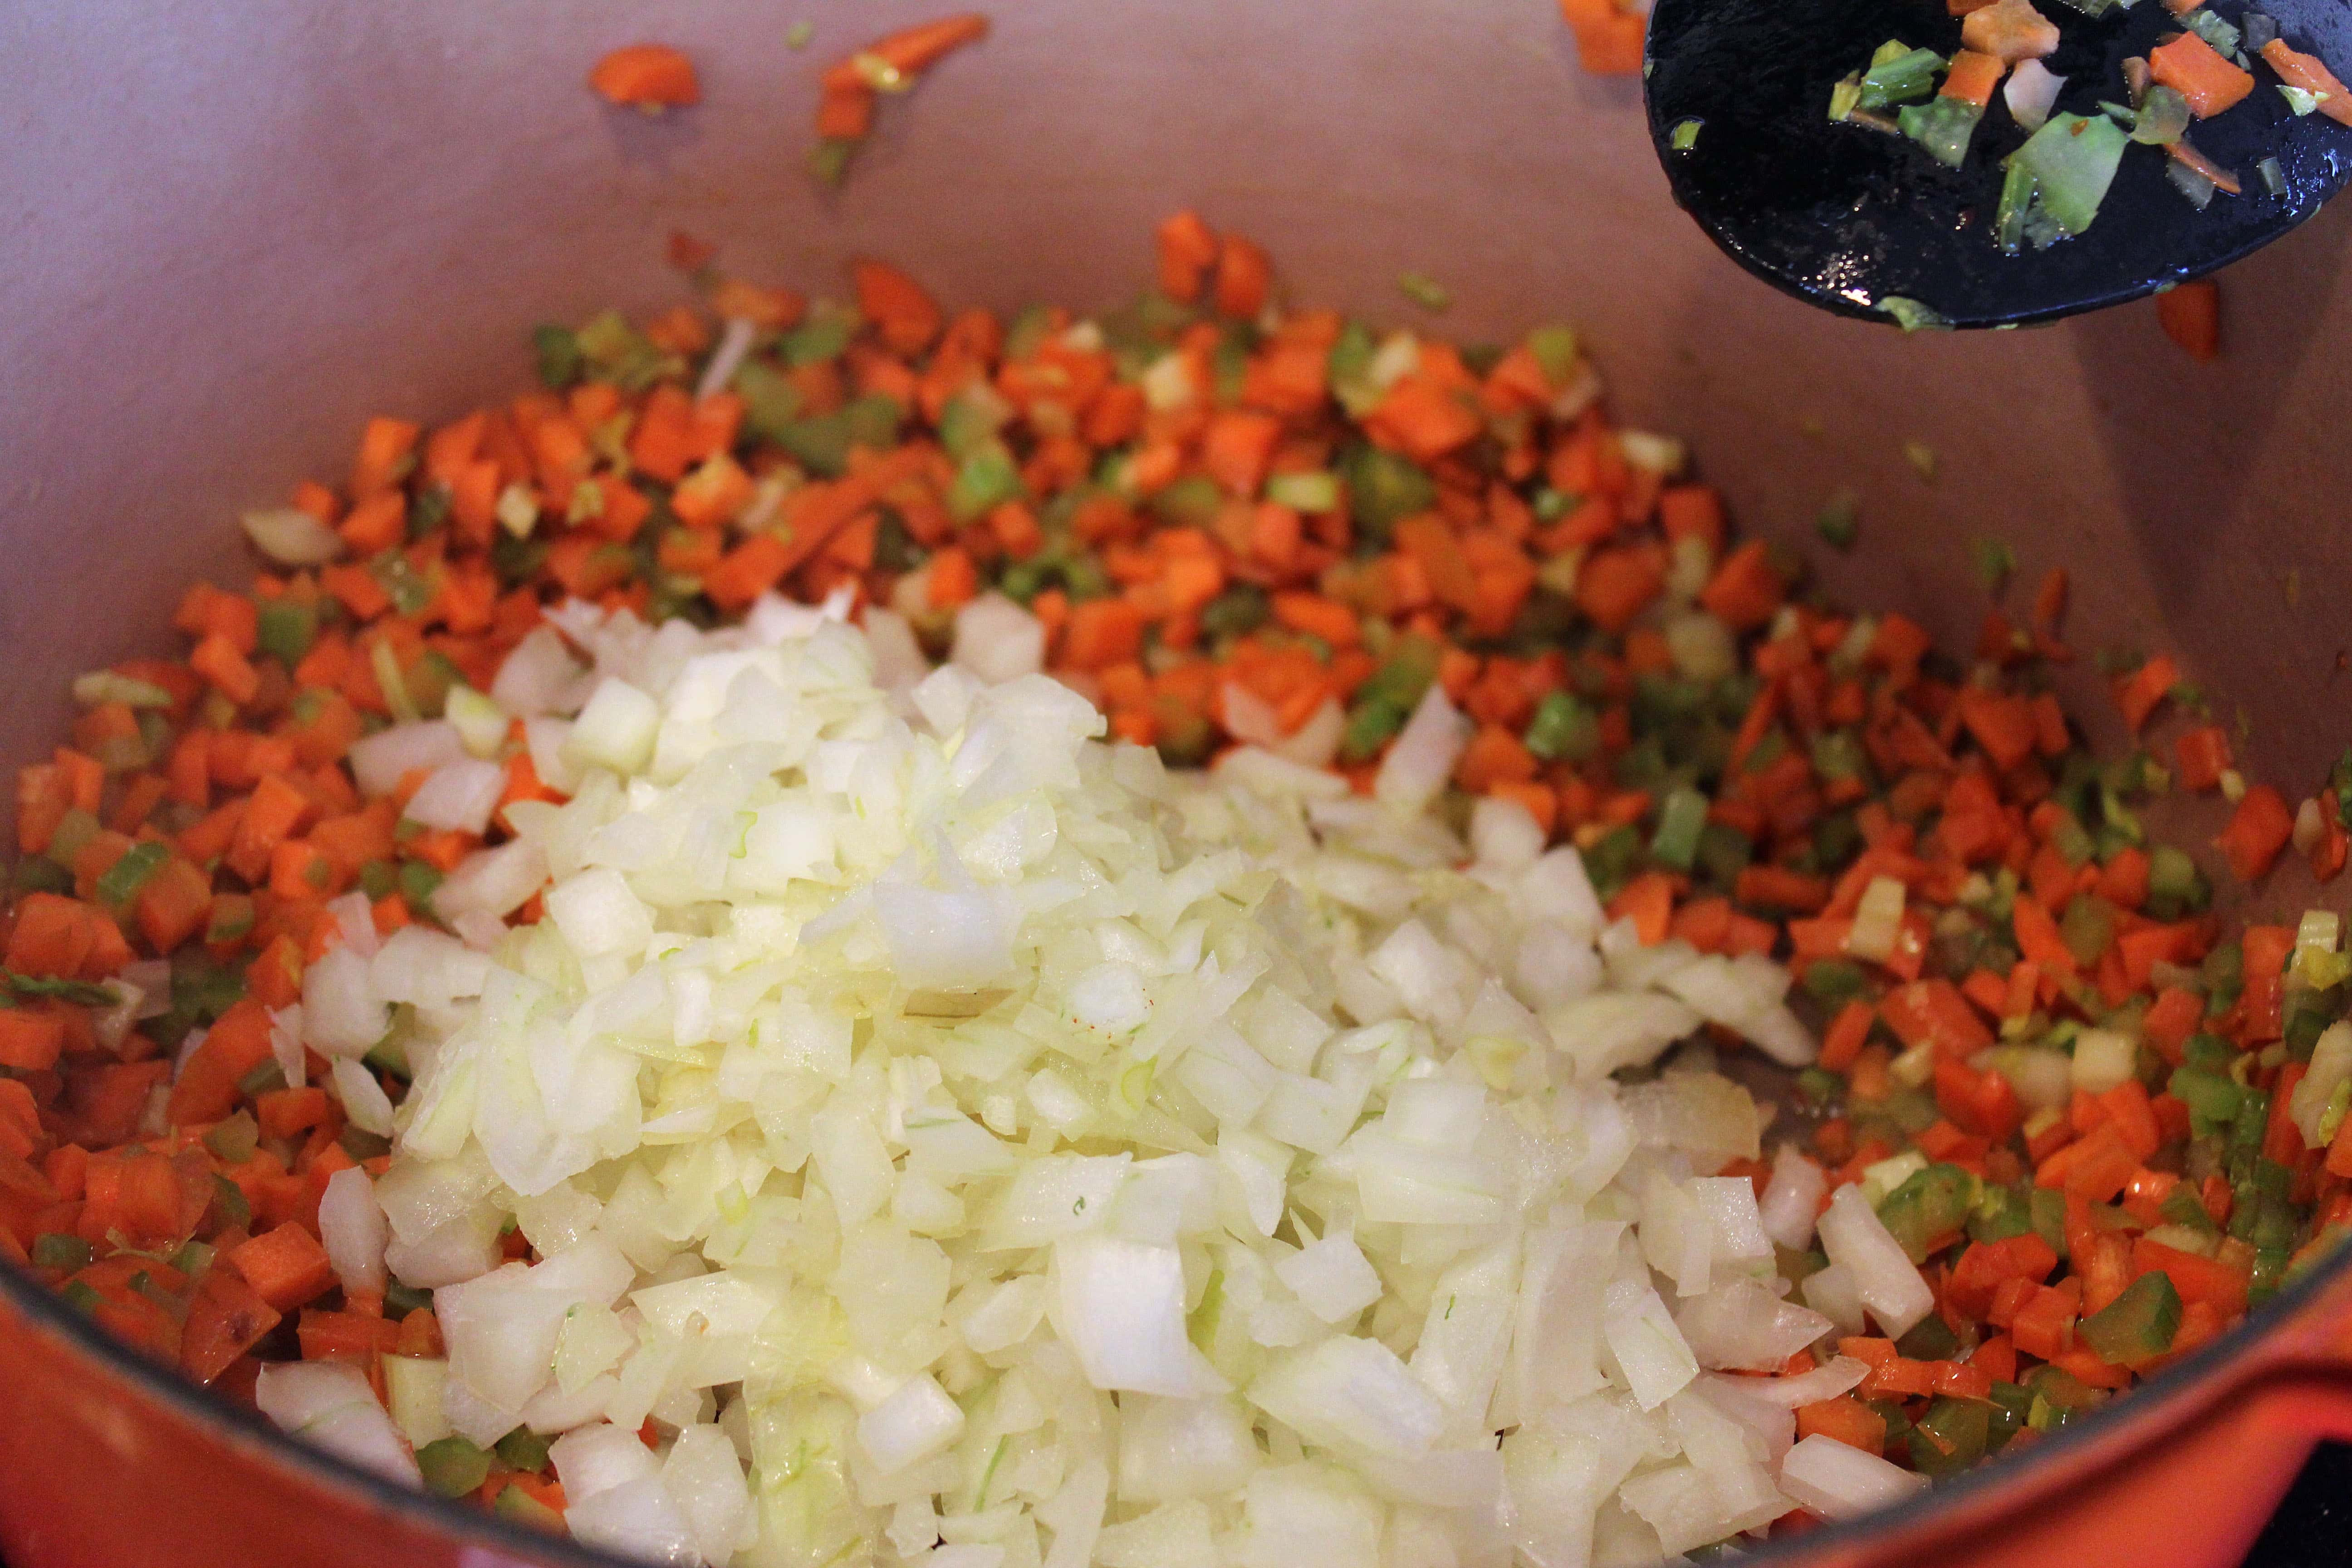 Add onion to softened hard veggies